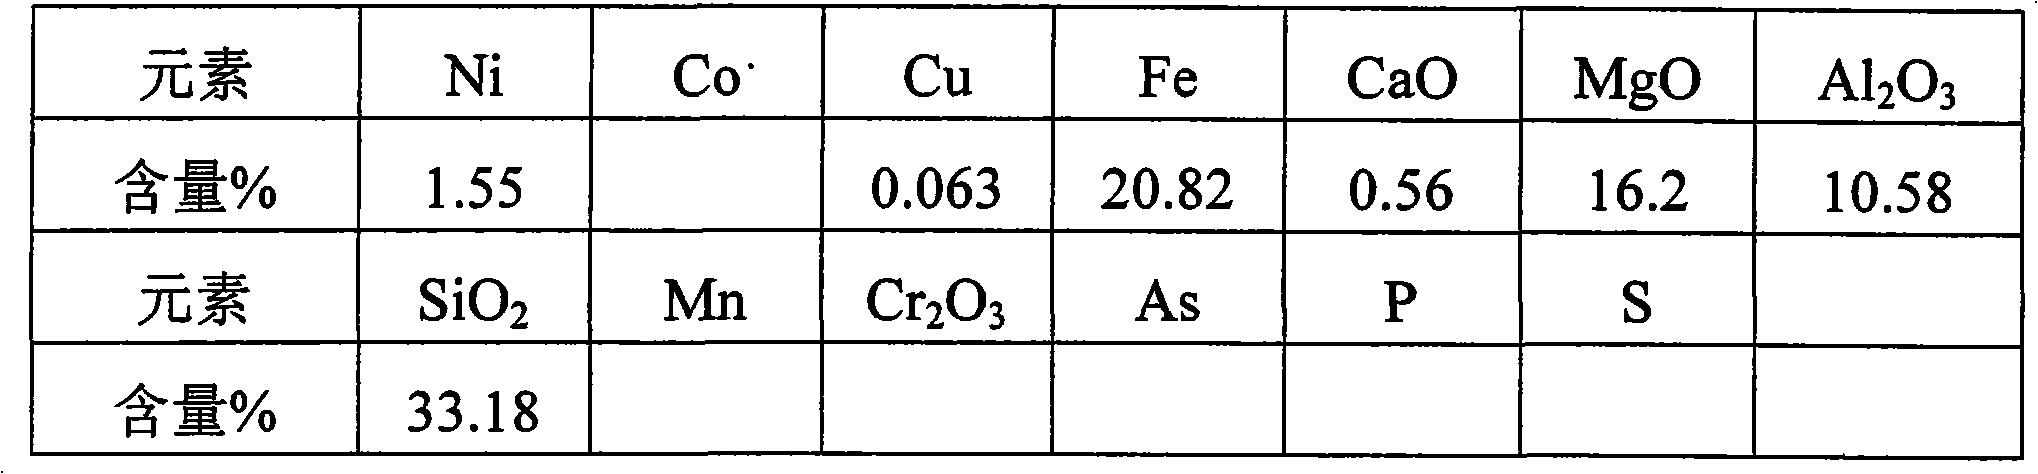 Method for producing ferronickel by utilizing low-magnesium intermediate type laterite nickel ore